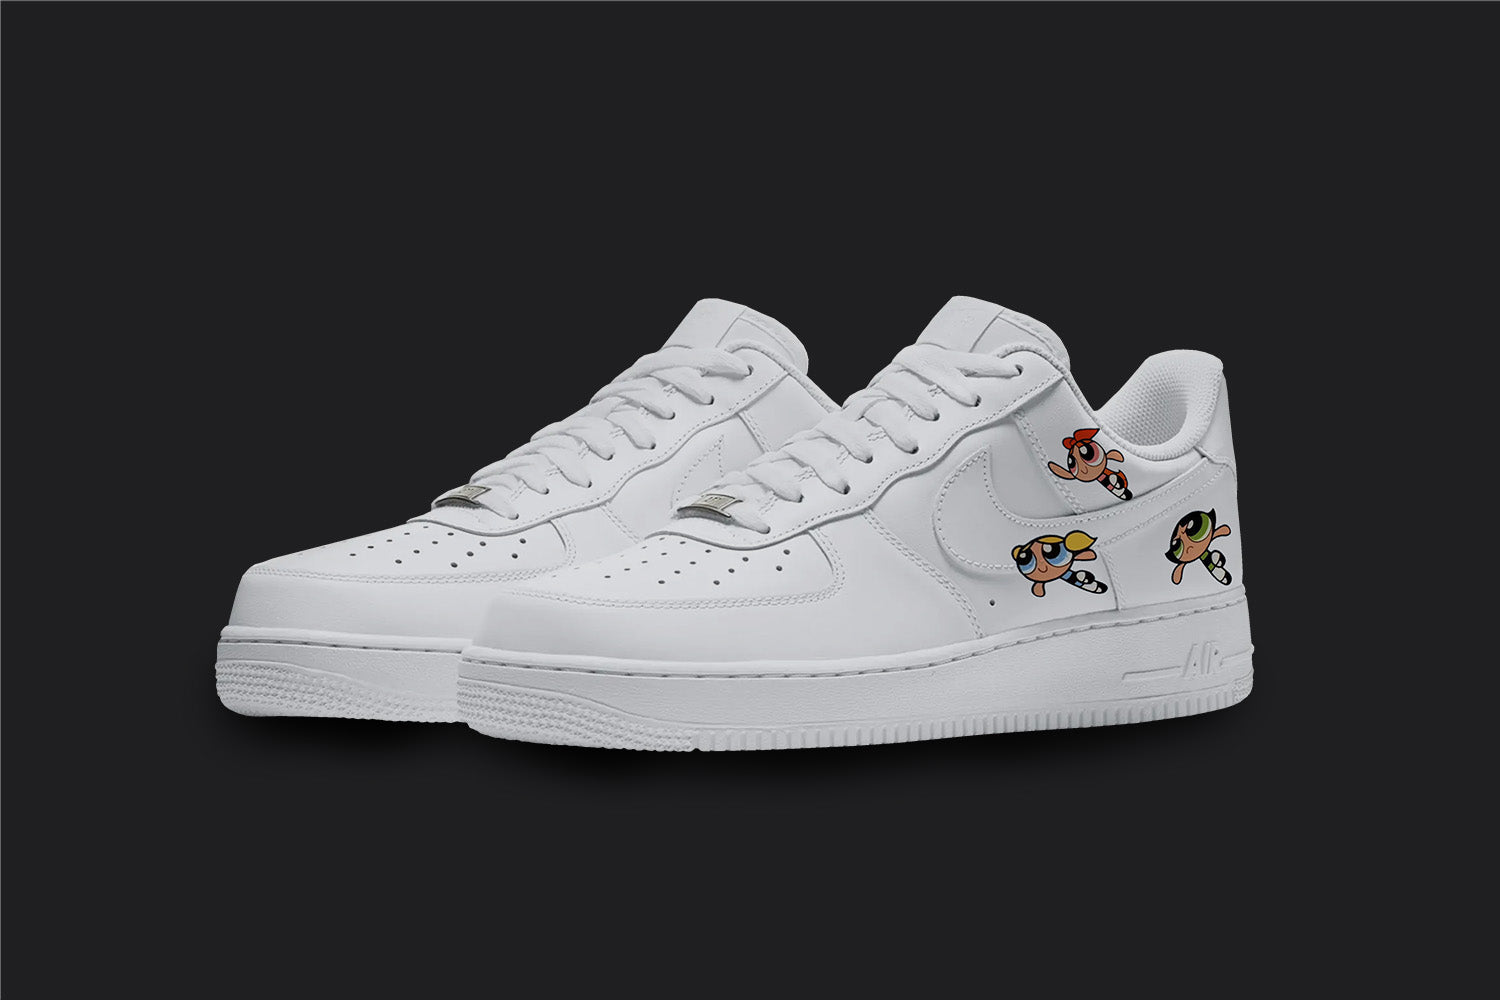 Black and White Custom Air Force 1 Sneakers 3 Y